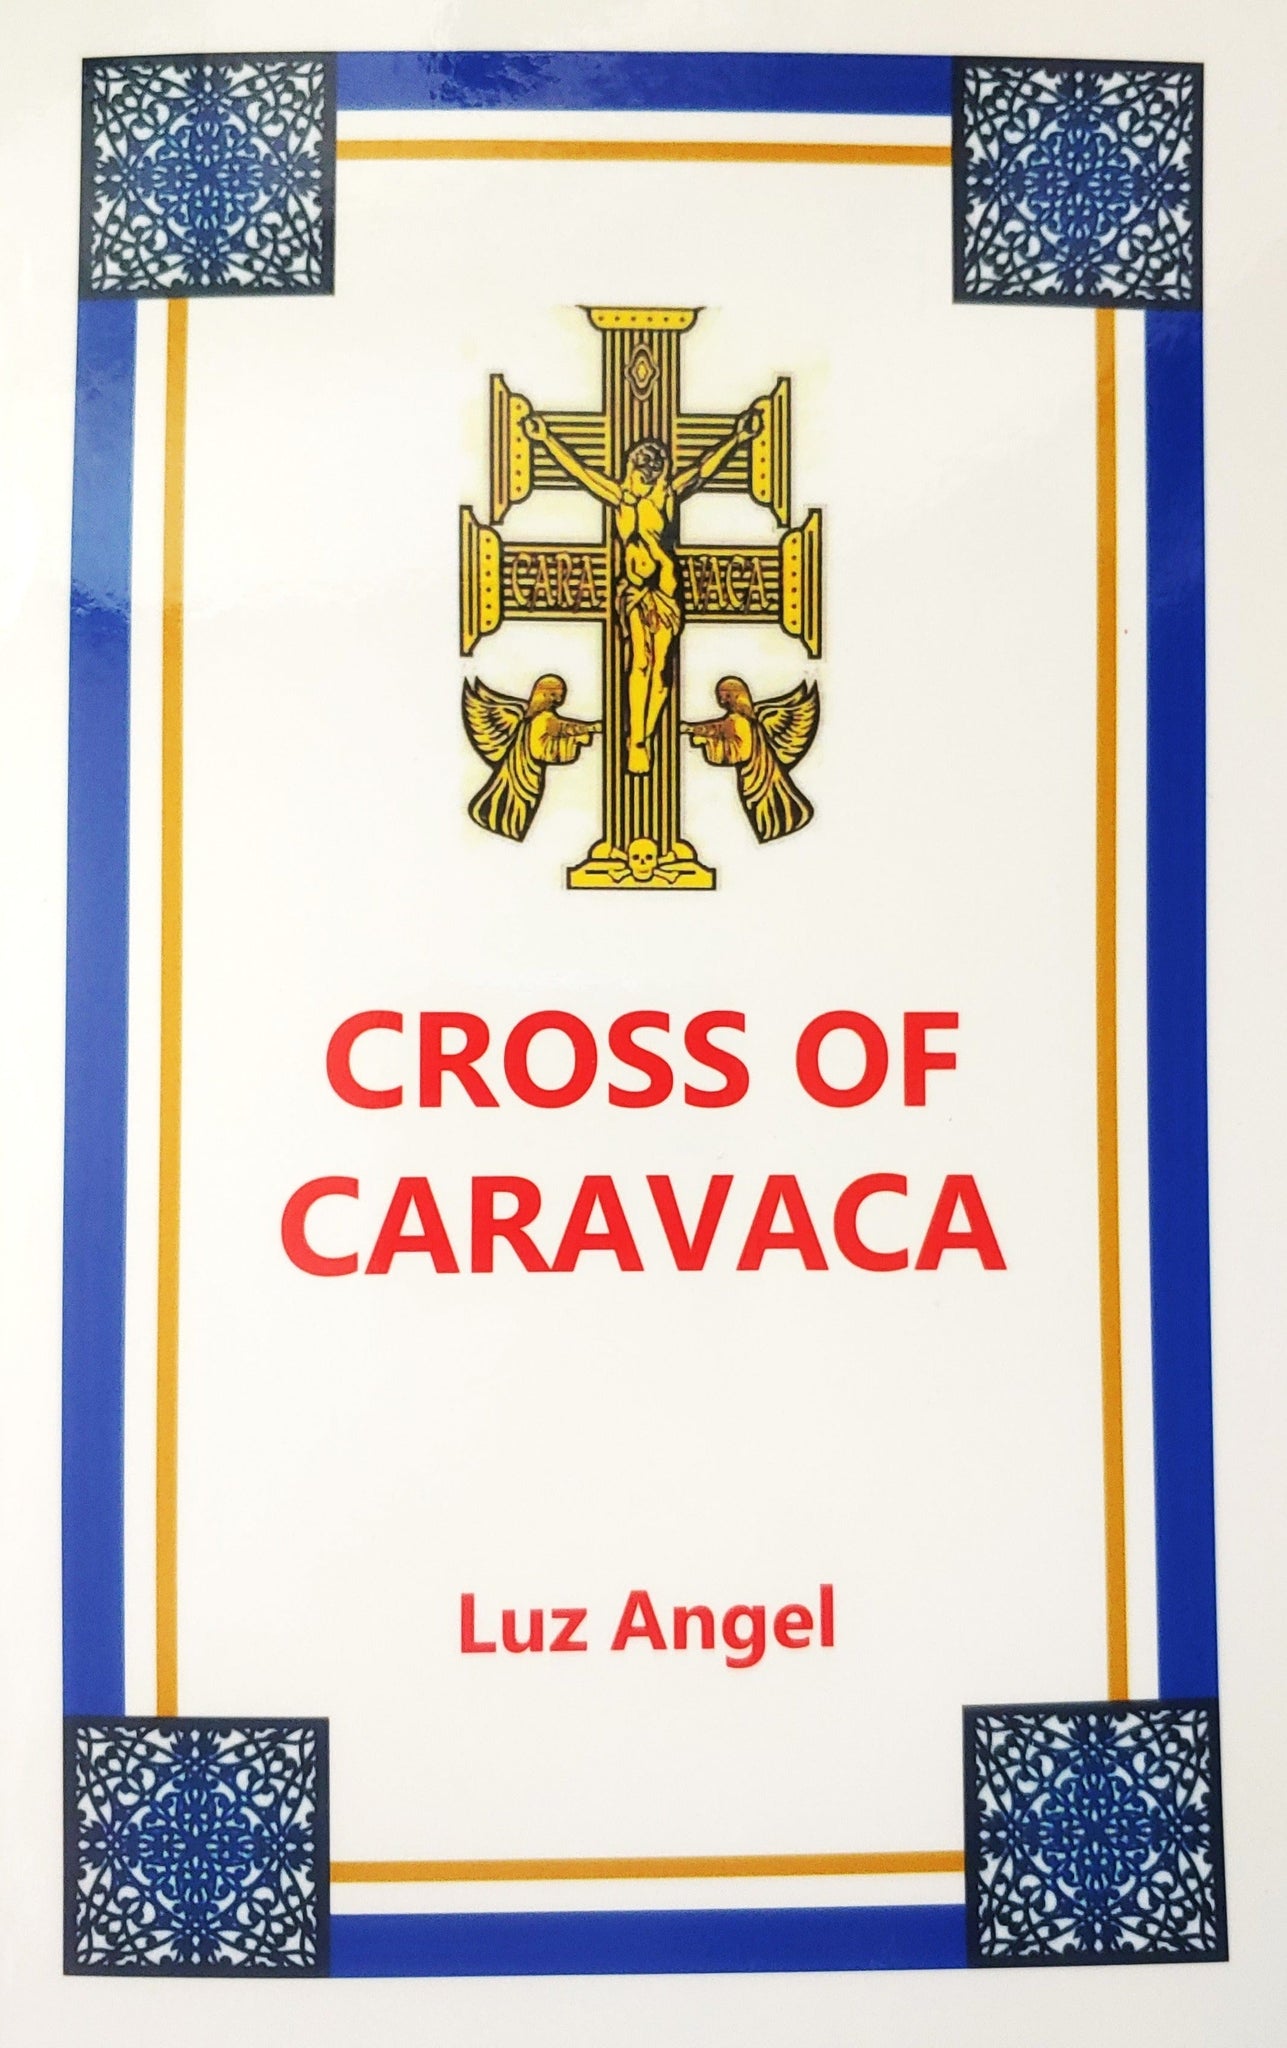 CROSS OF CARAVACA by Luz Angel